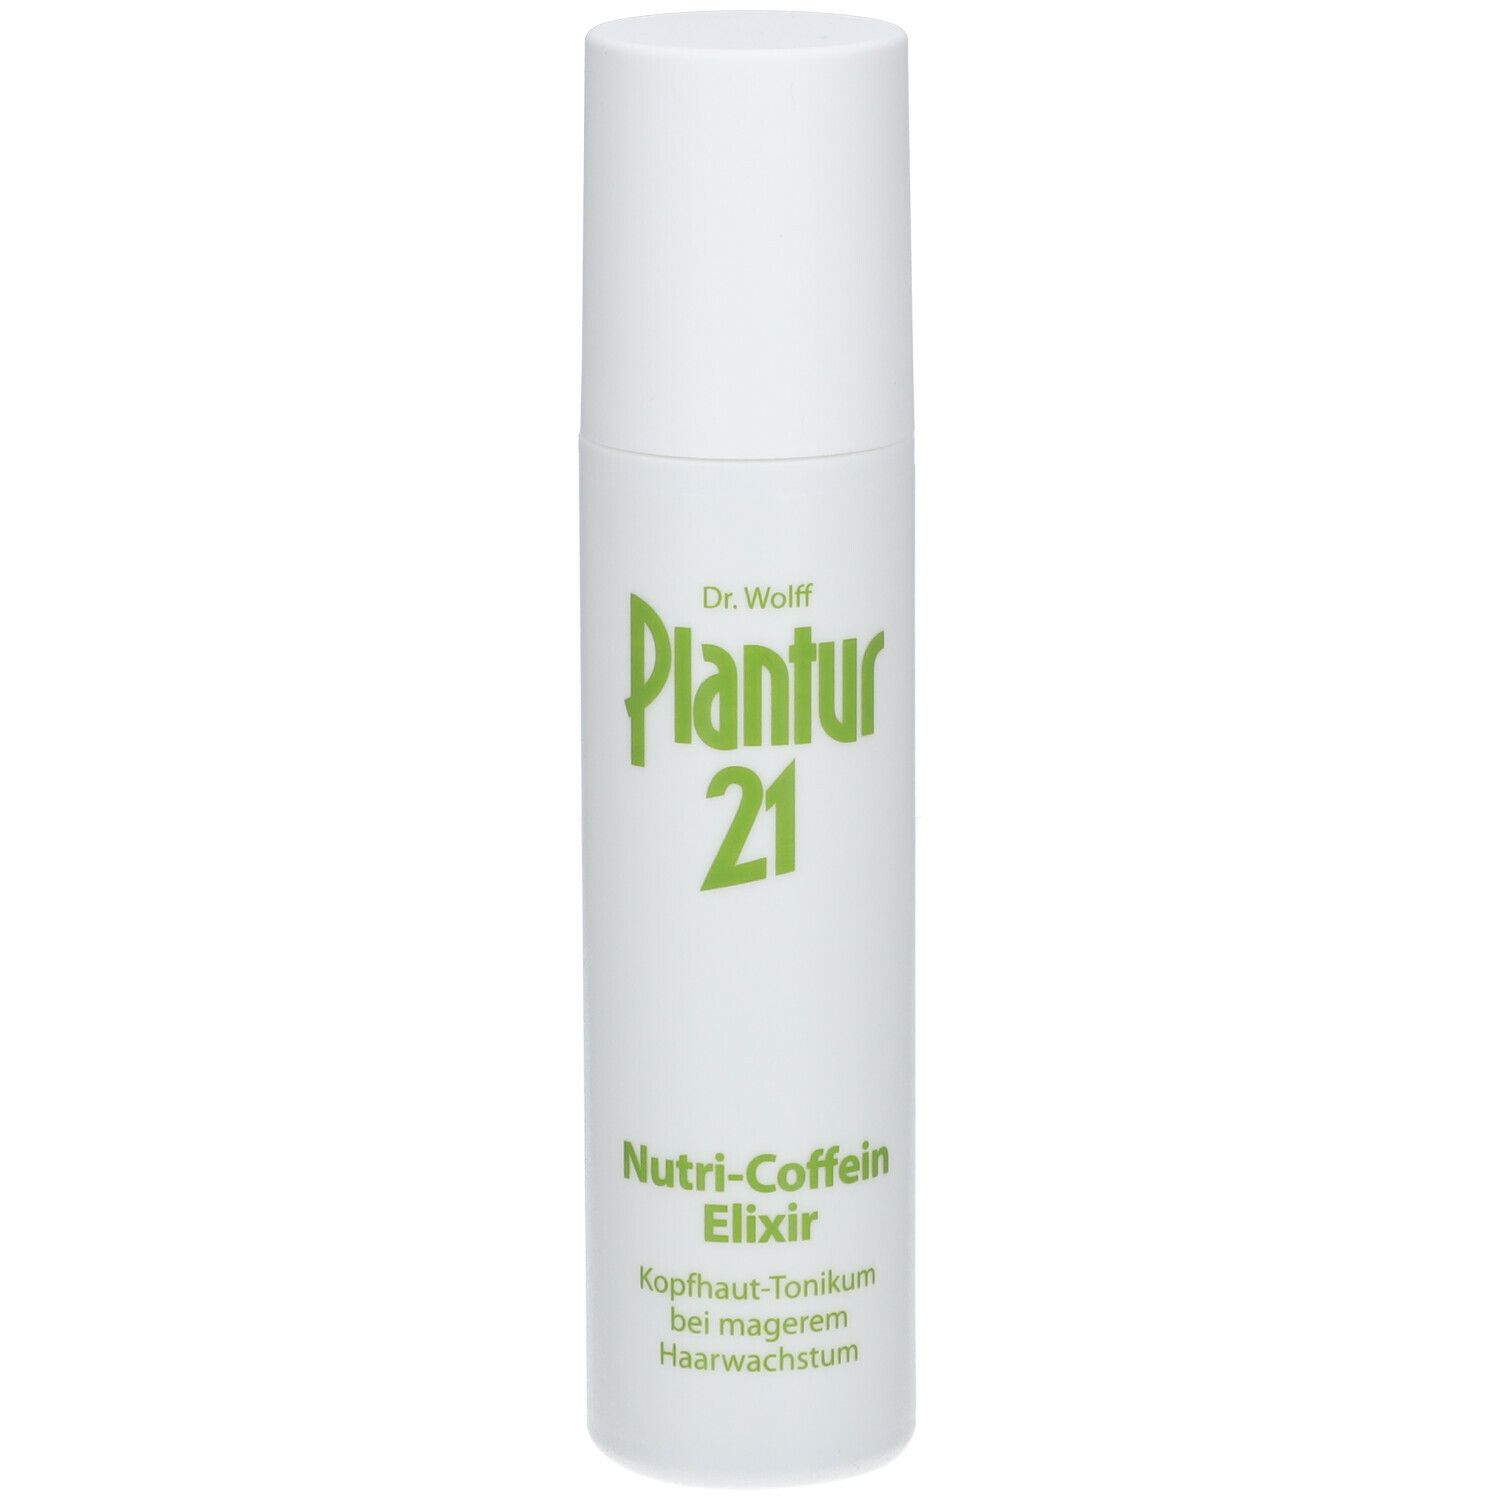 Plantur21 Nutri-Coffein-Elixir